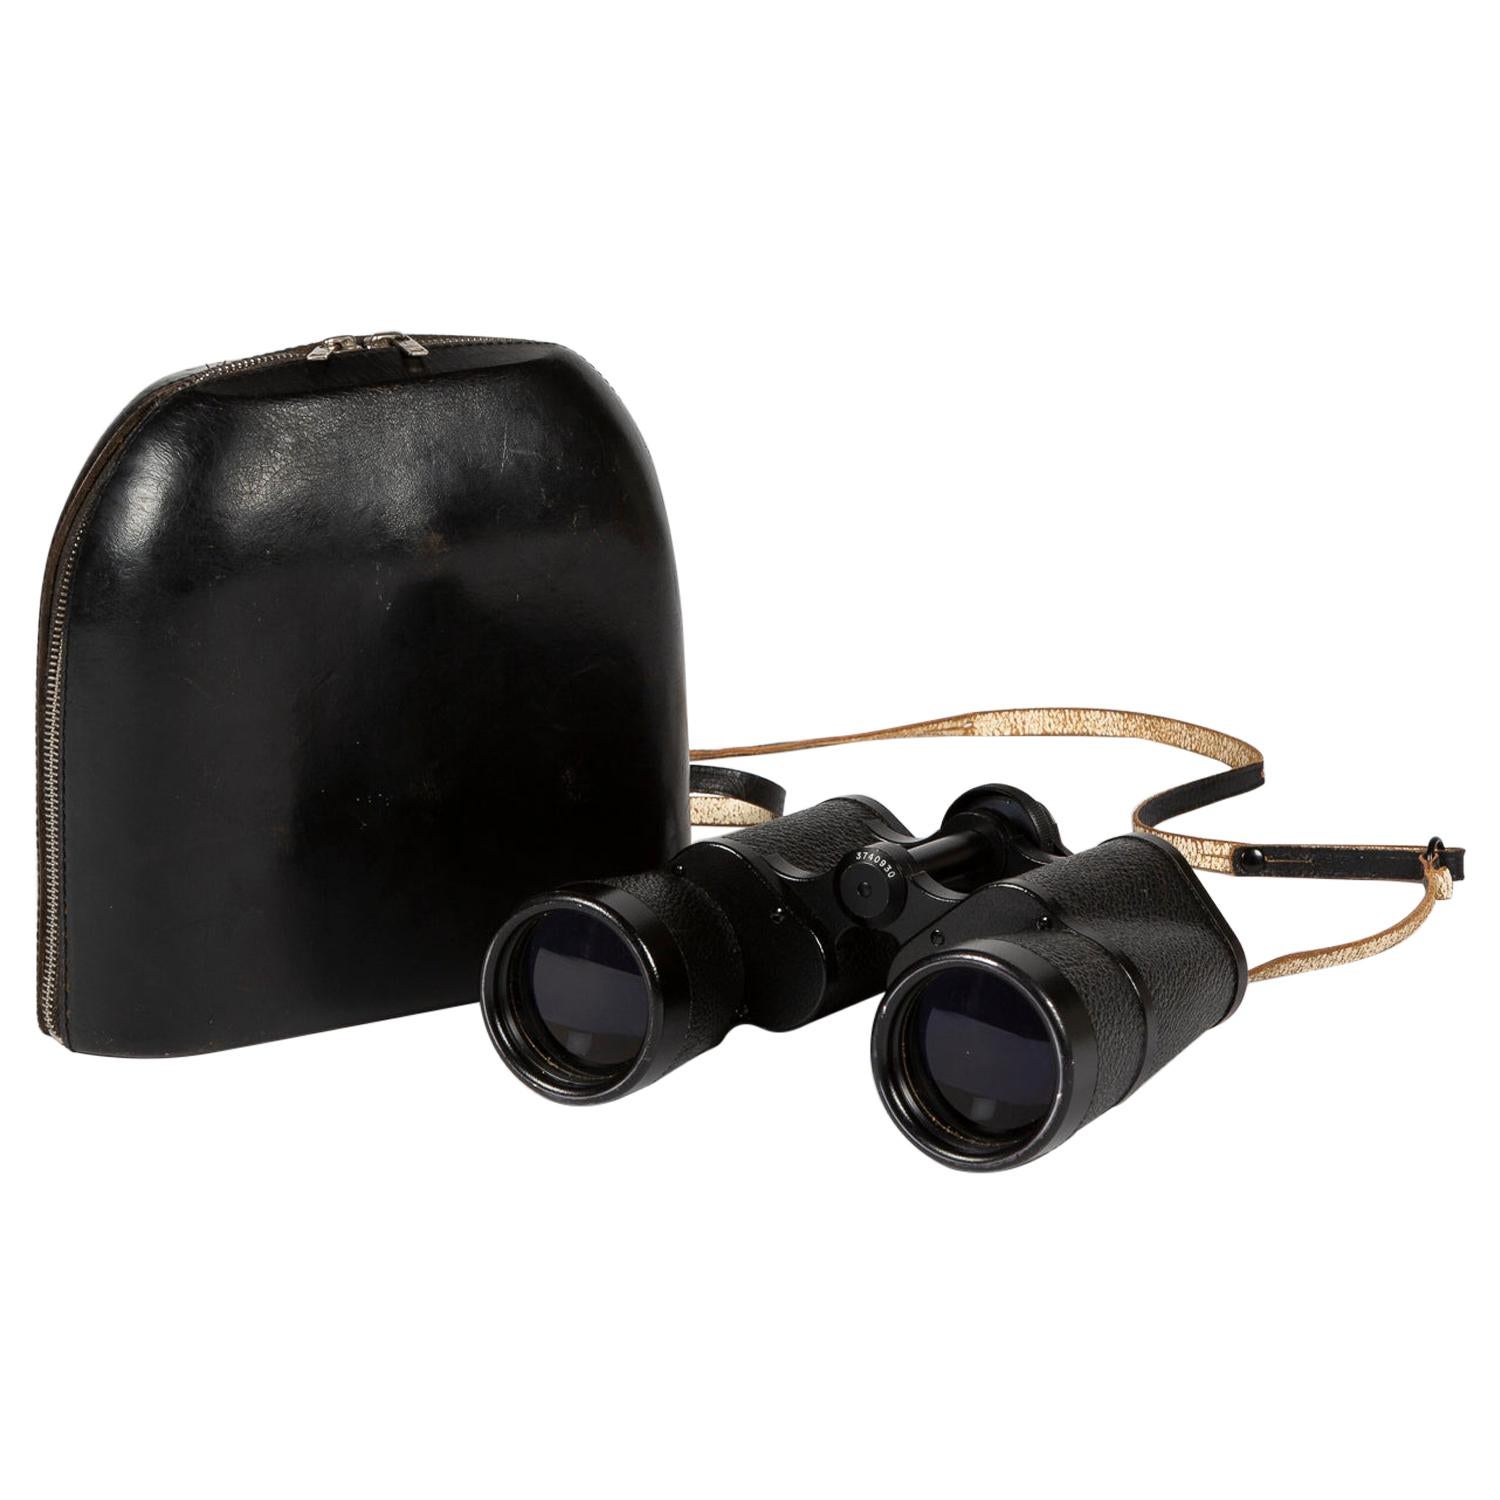 Carl Zeiss "Jenoptem" Binoculars, with Original Black Leather Case